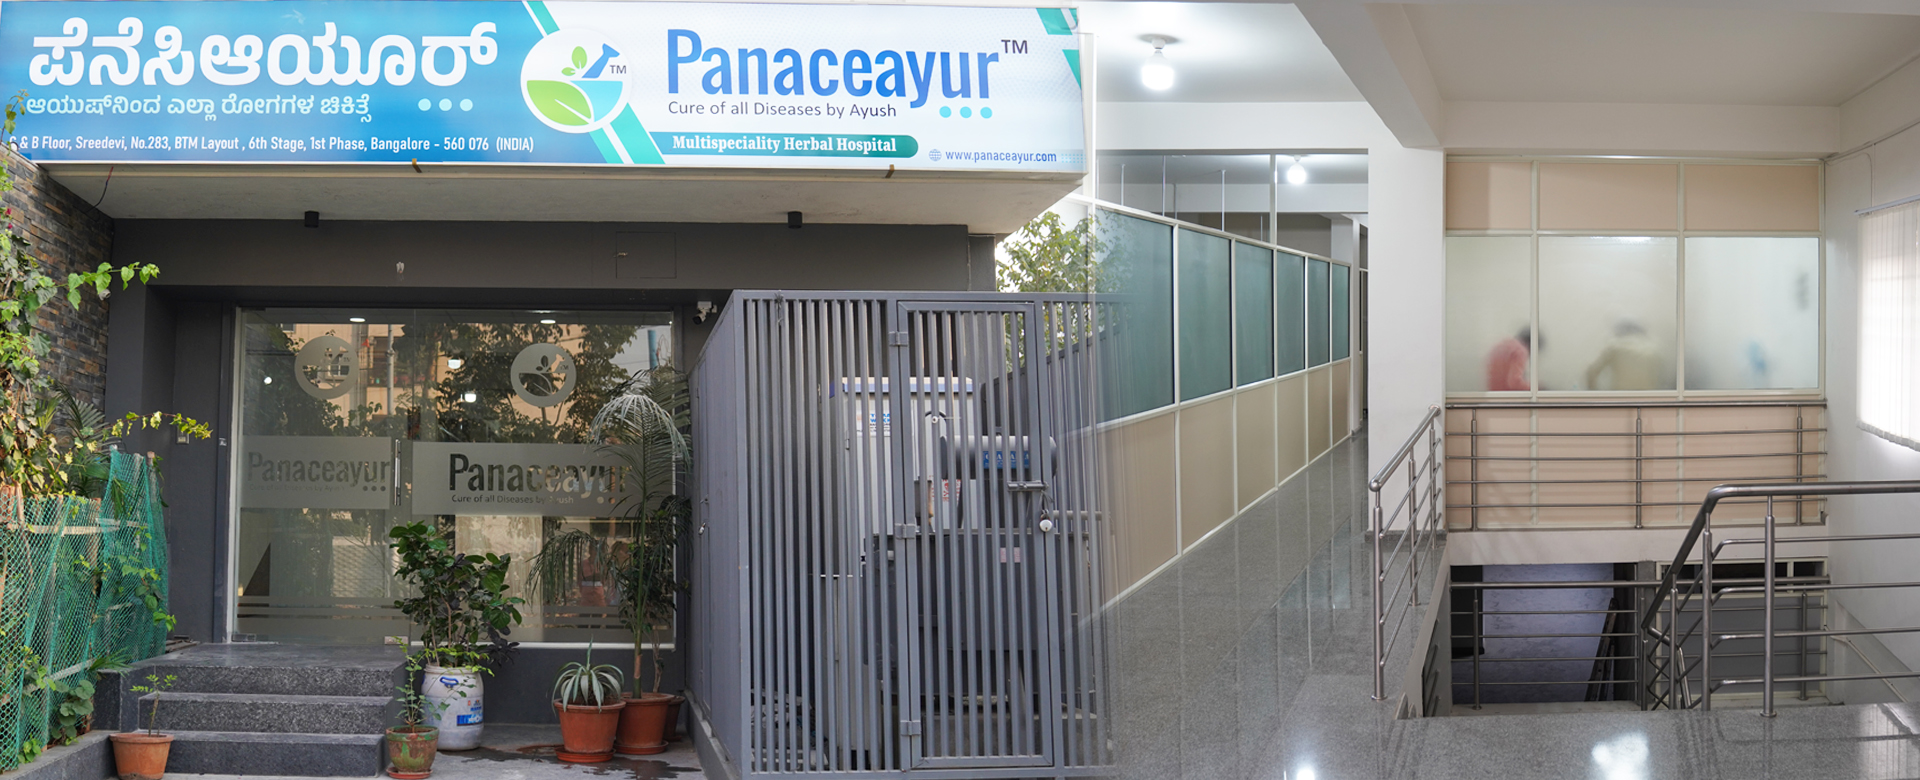 Panaceayur International Private Limited